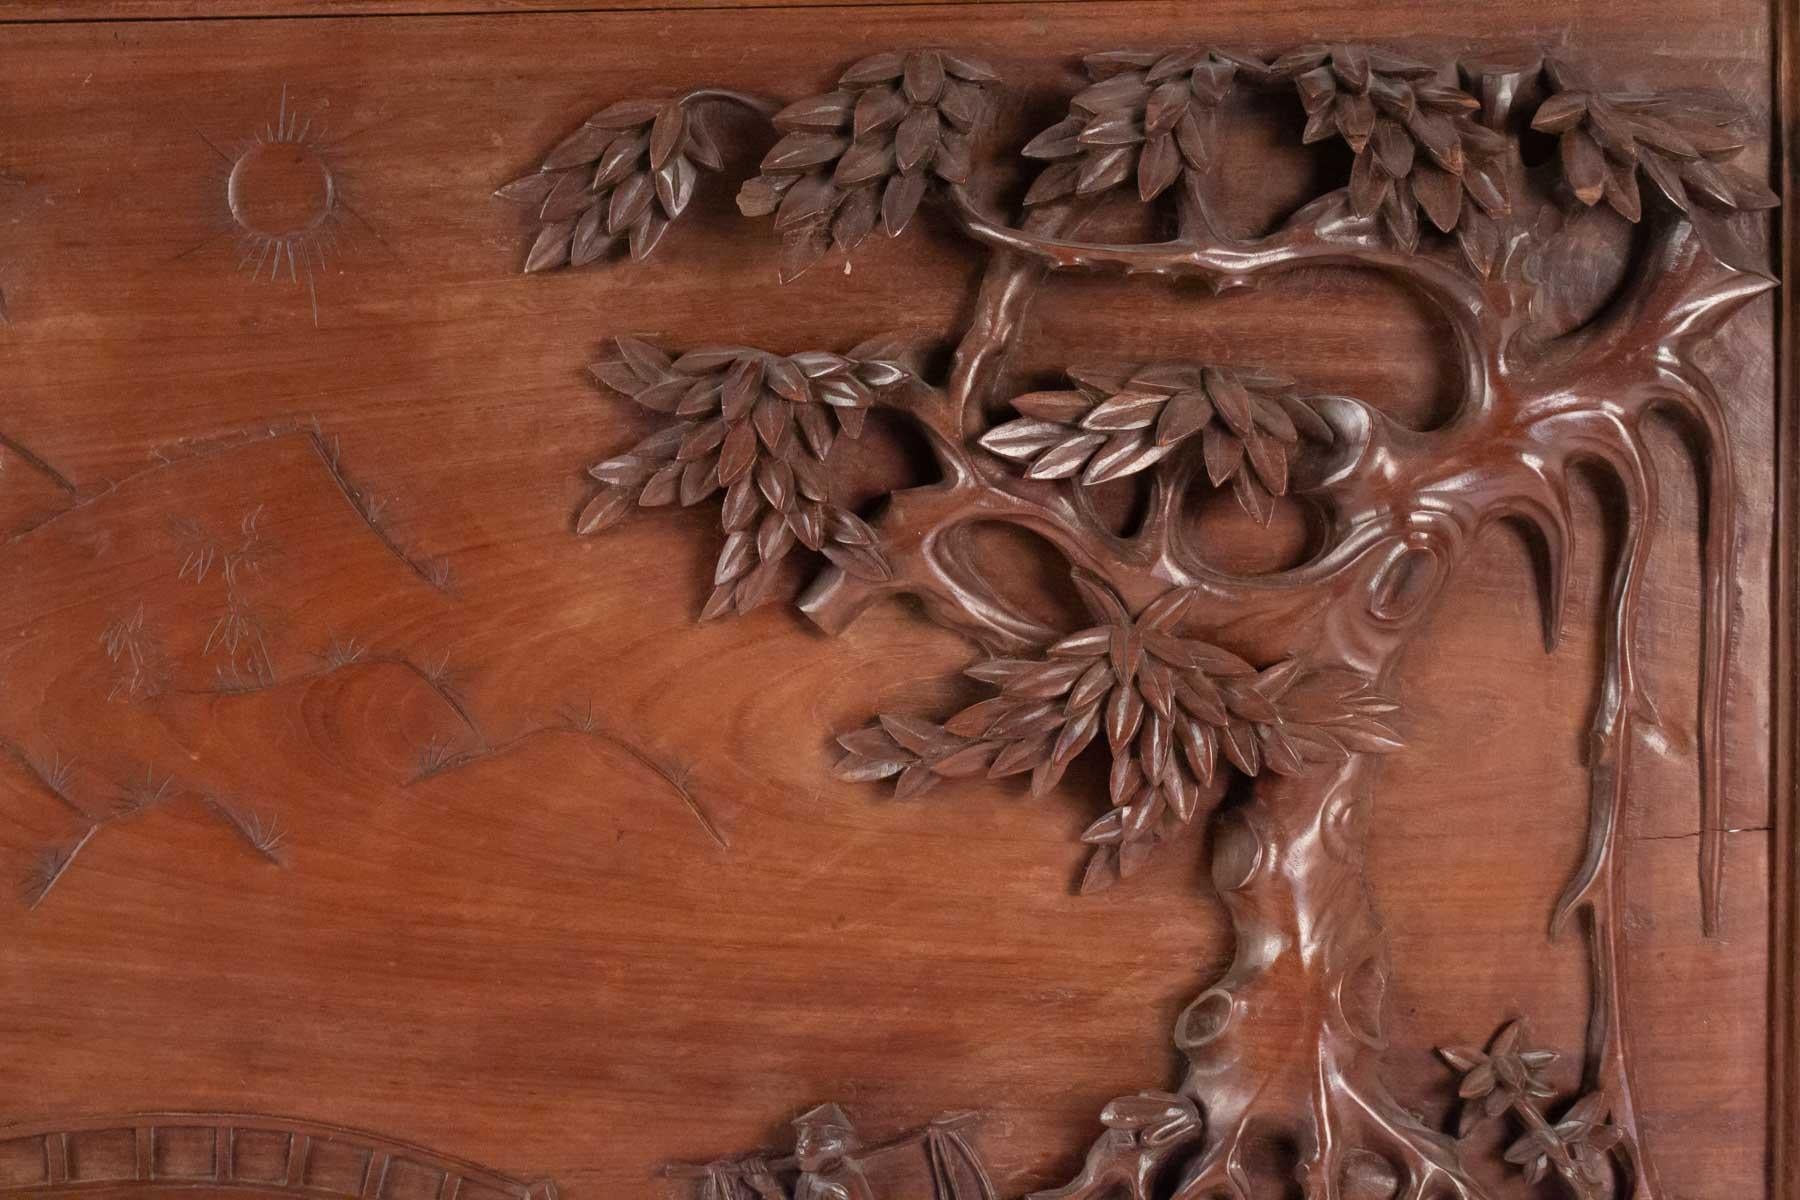 Geschnitzte Holzplatte, China, 20. Jahrhundert, Innendekoration
Maße: H 48cm, B 66cm, B 3cm.